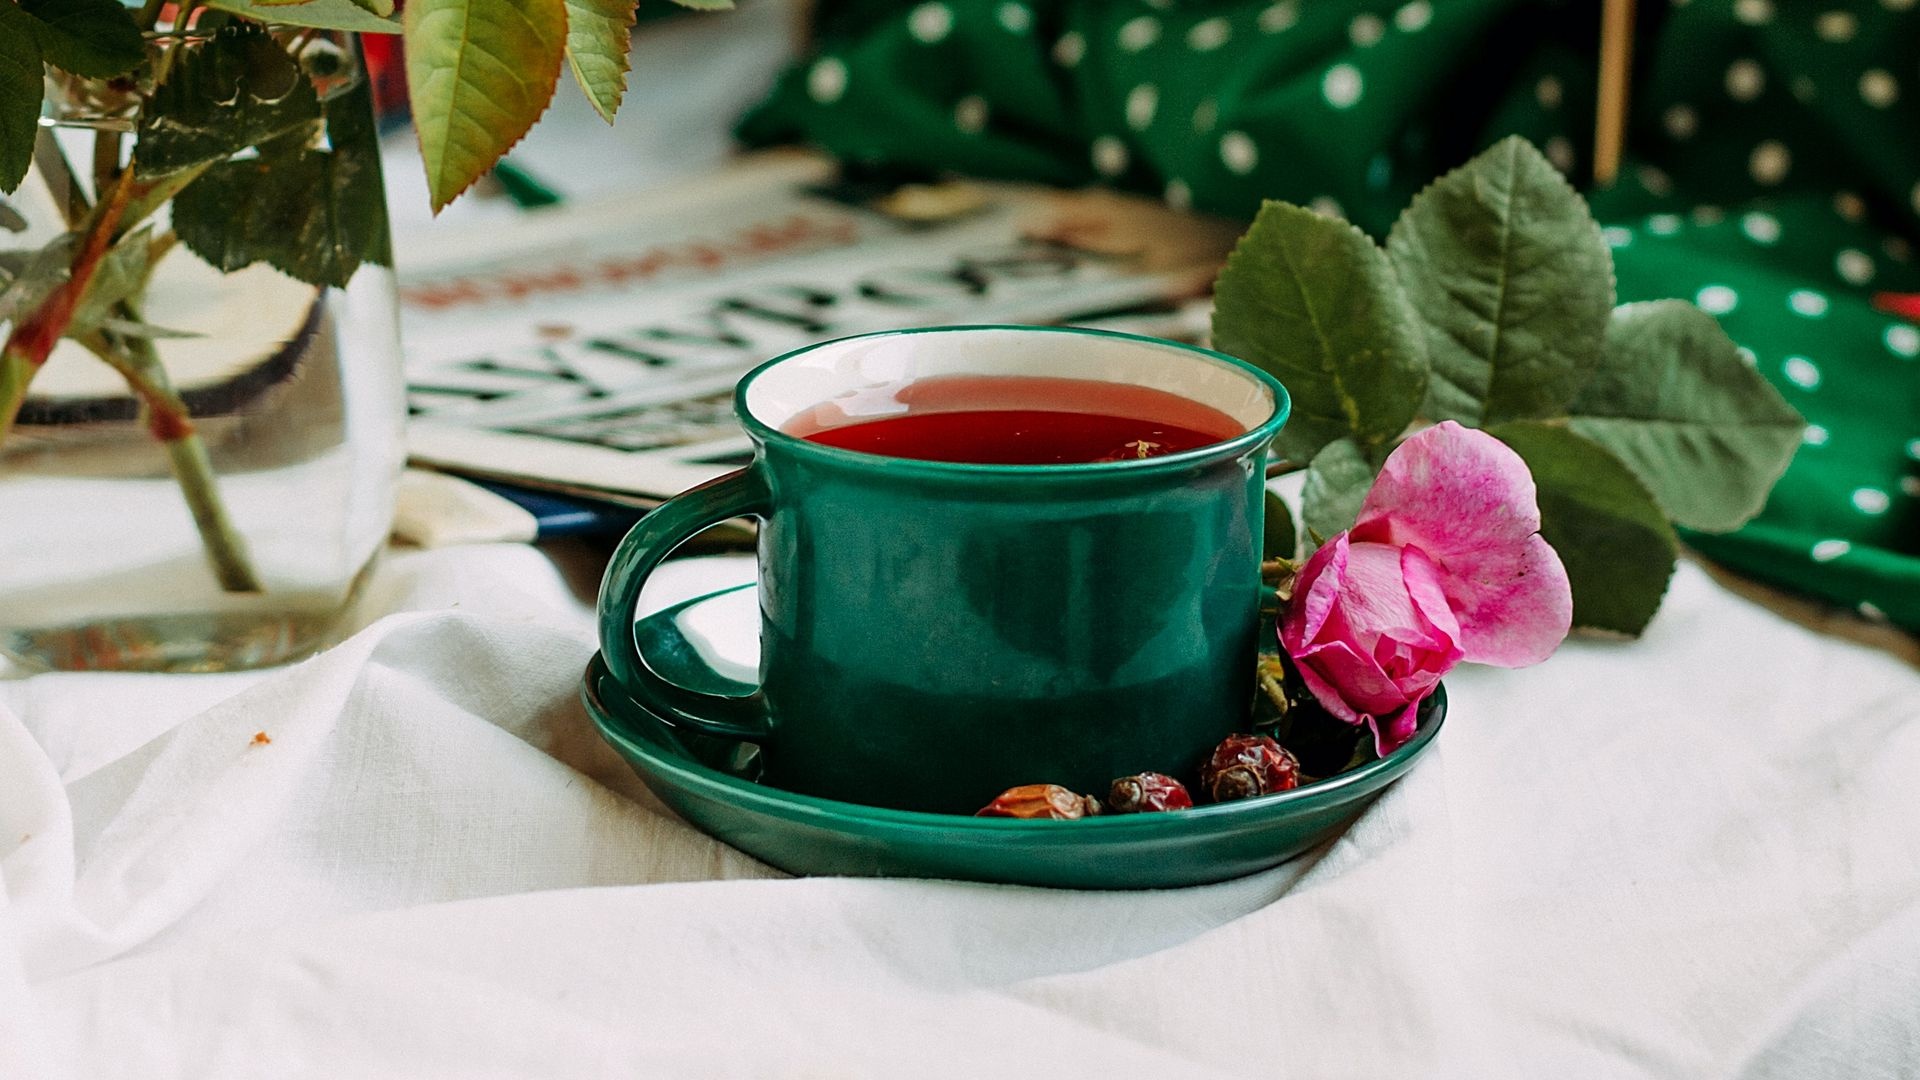 Tea: An aromatic herbal beverage, Caffeine-free, brewed using fresh or dried rose hips. 1920x1080 Full HD Wallpaper.